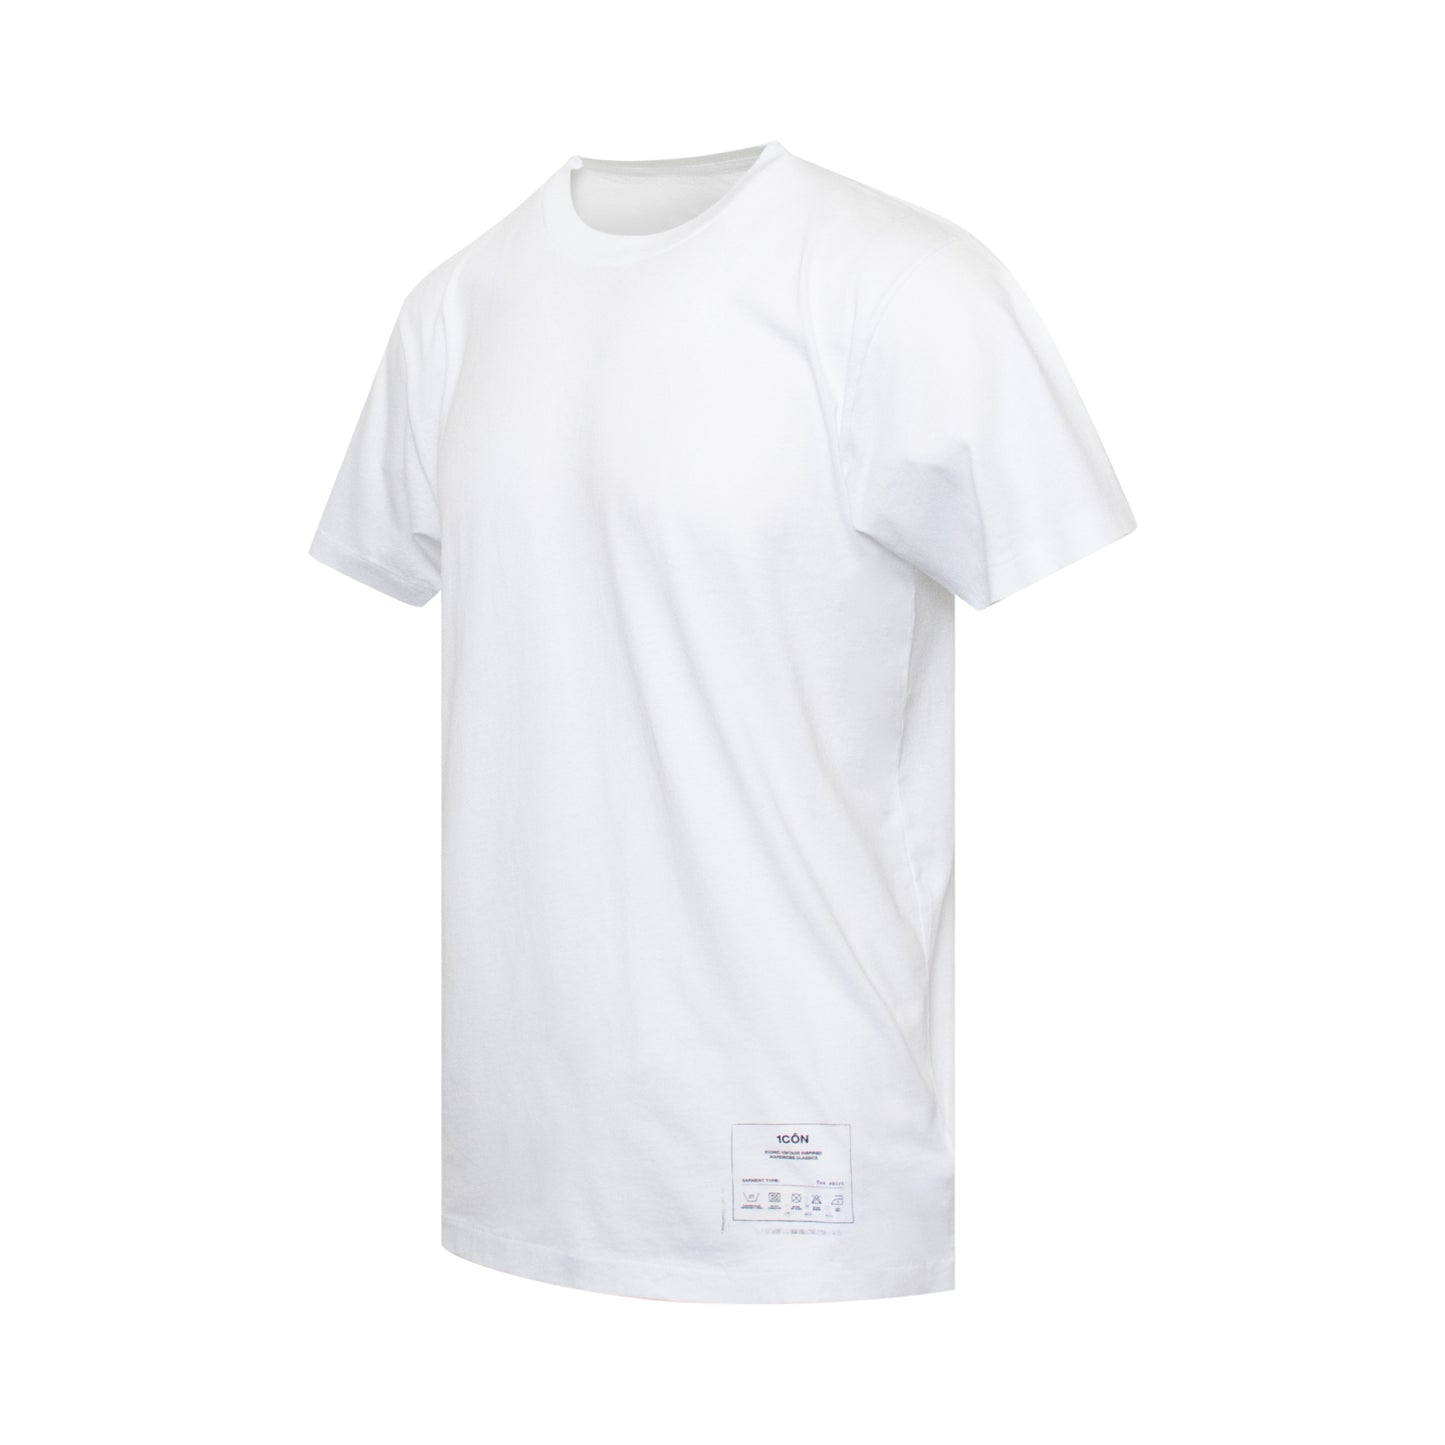 1CON Print T-Shirt in White